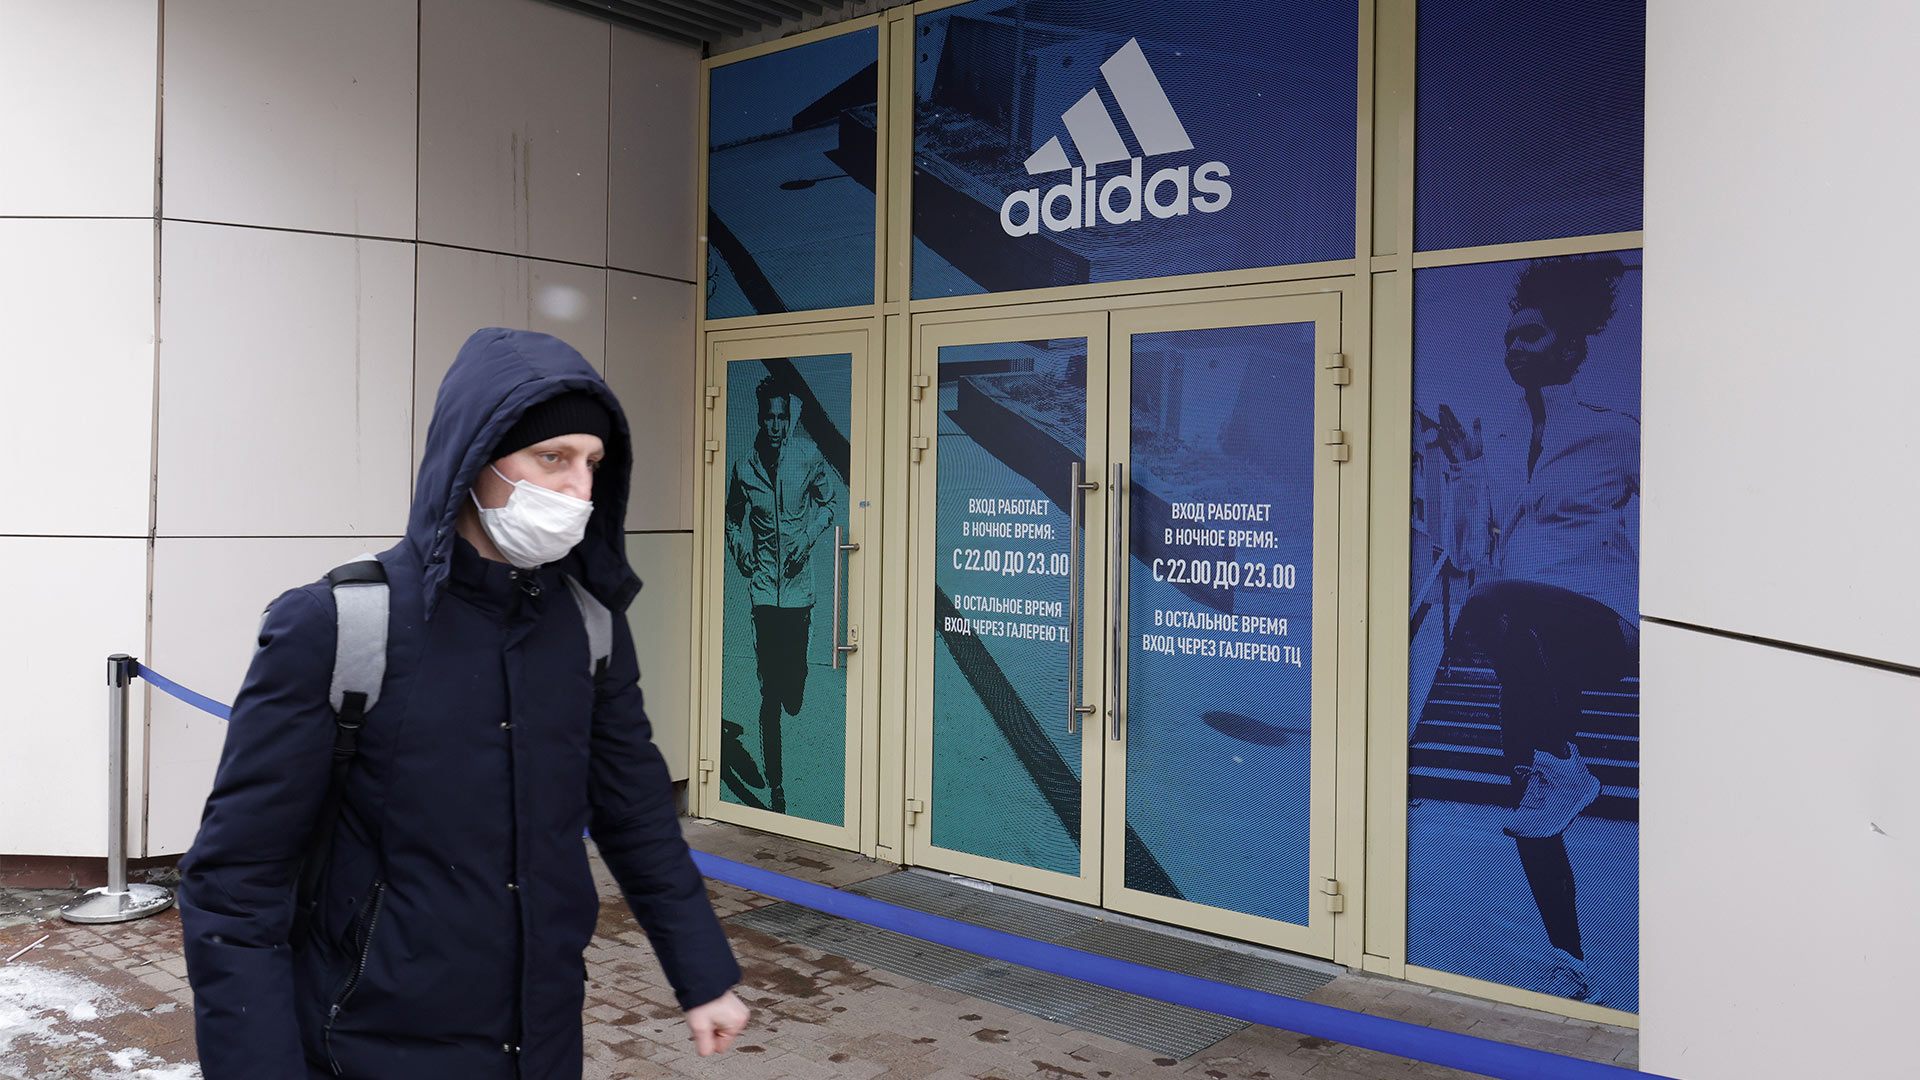 Geschlossener Adidas Store in Moskau | picture alliance/dpa/TASS